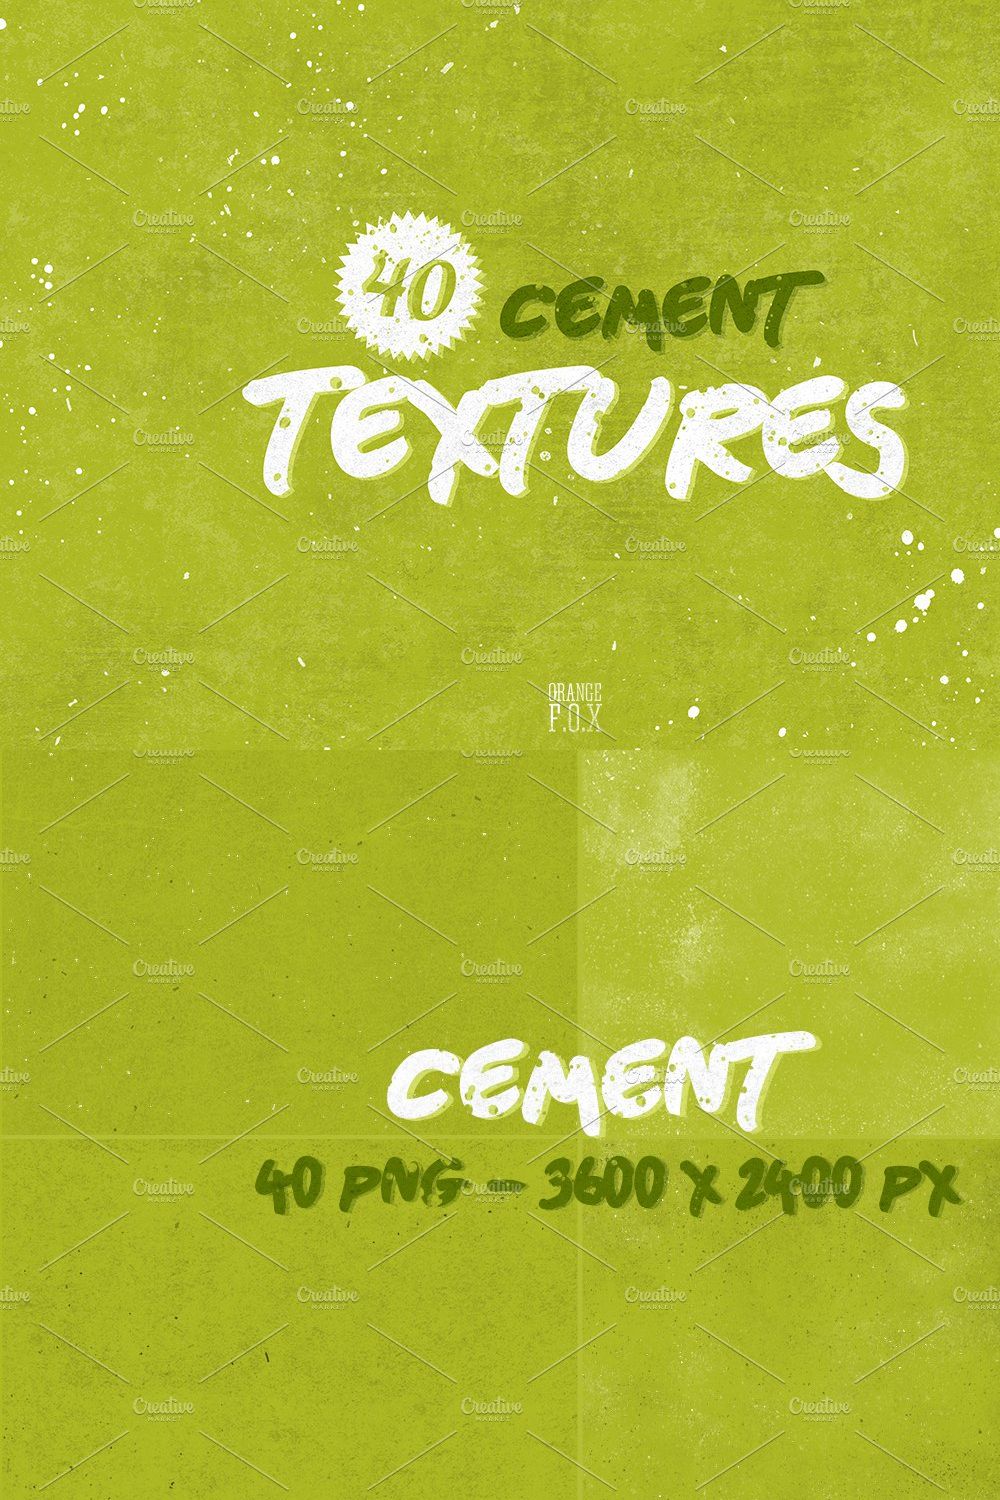 40 Cement Textures pinterest preview image.